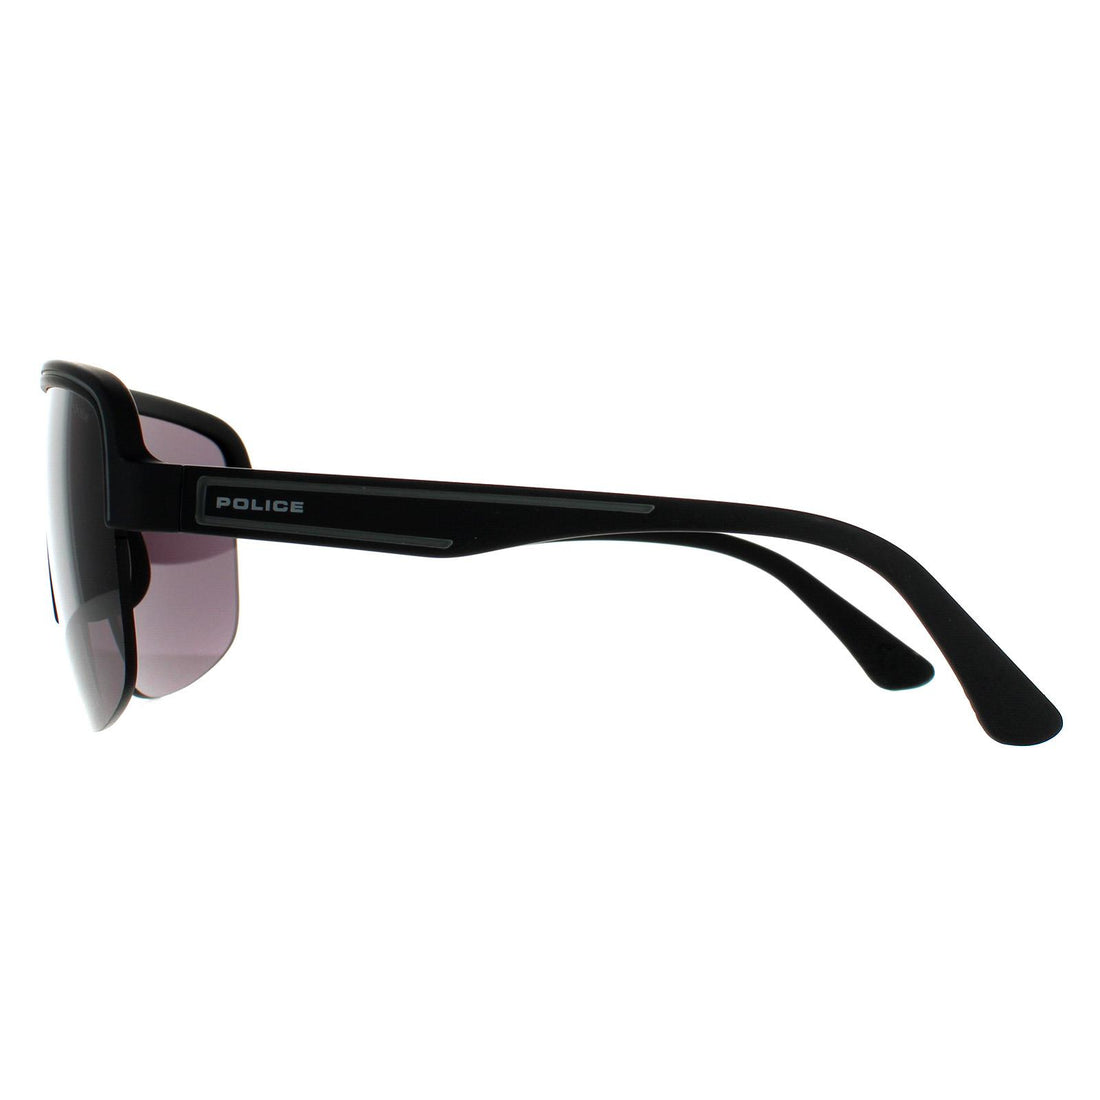 Police Sunglasses SPLB47M Arcade 3 0U28 Matte Black Smoke Grey